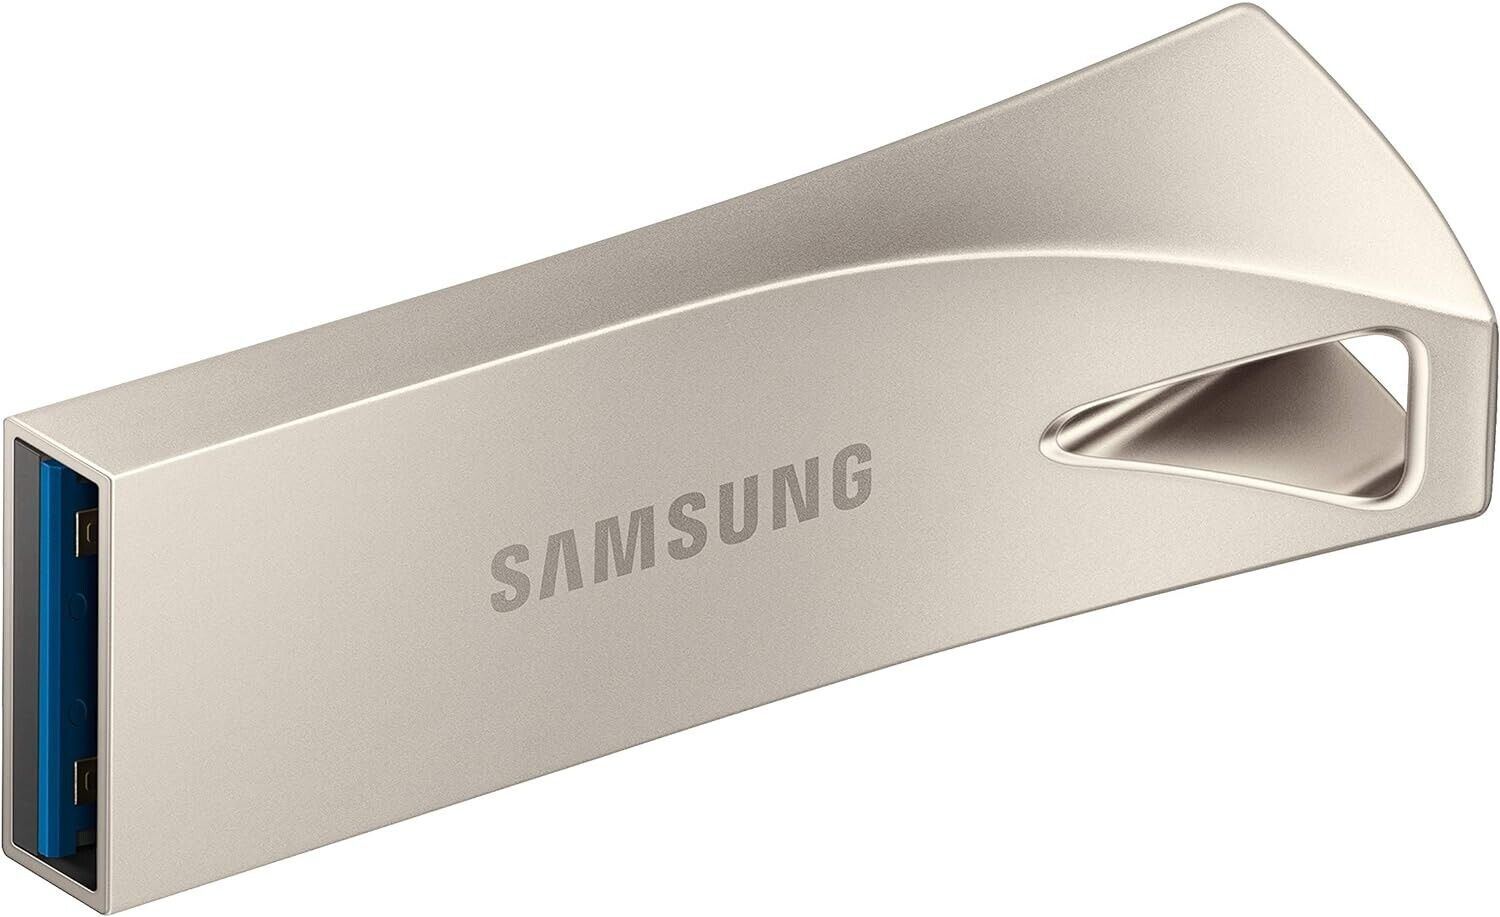 SAMSUNG 3.1 USB Flash Drive, 64GB, Champagne Silver, MUF-64BE3/AM